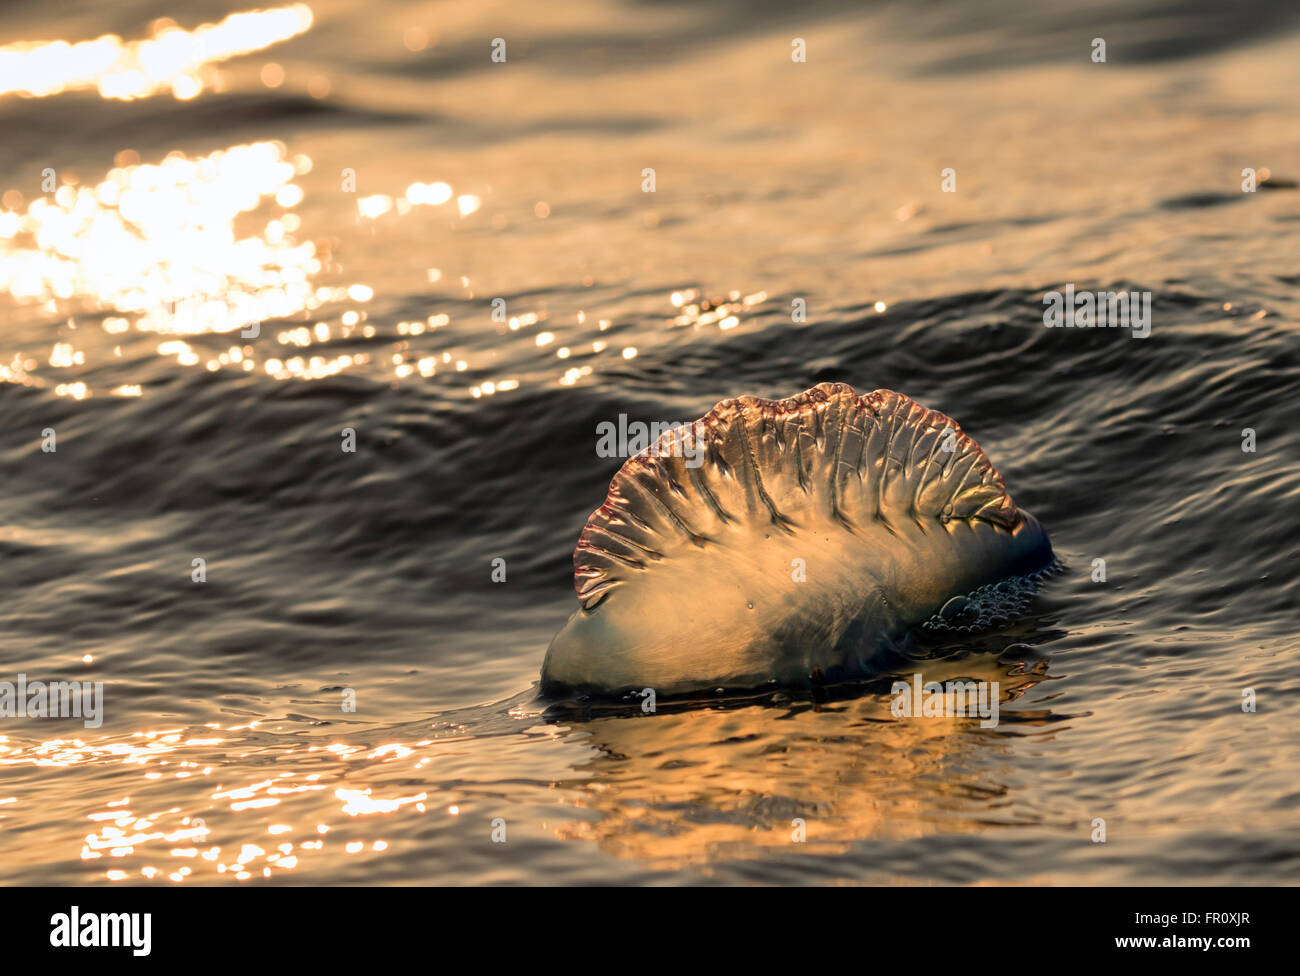 Atlantic Portuguese man o' war (Physalia physalis) floating in the ocean at sunset, Galveston, Texas, USA Stock Photo